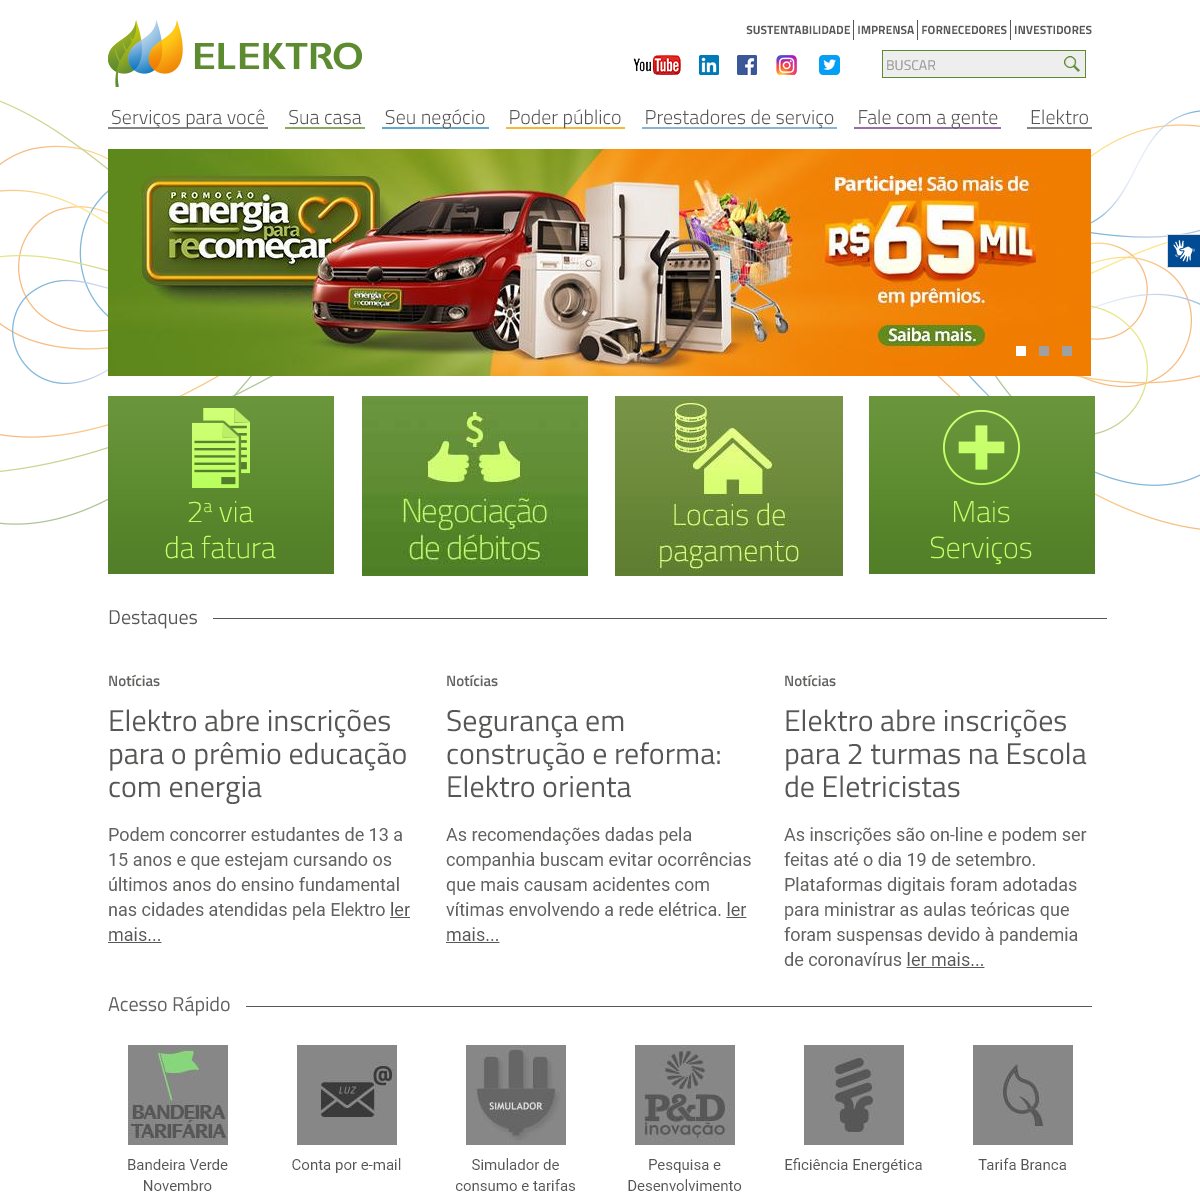 A complete backup of elektro.com.br